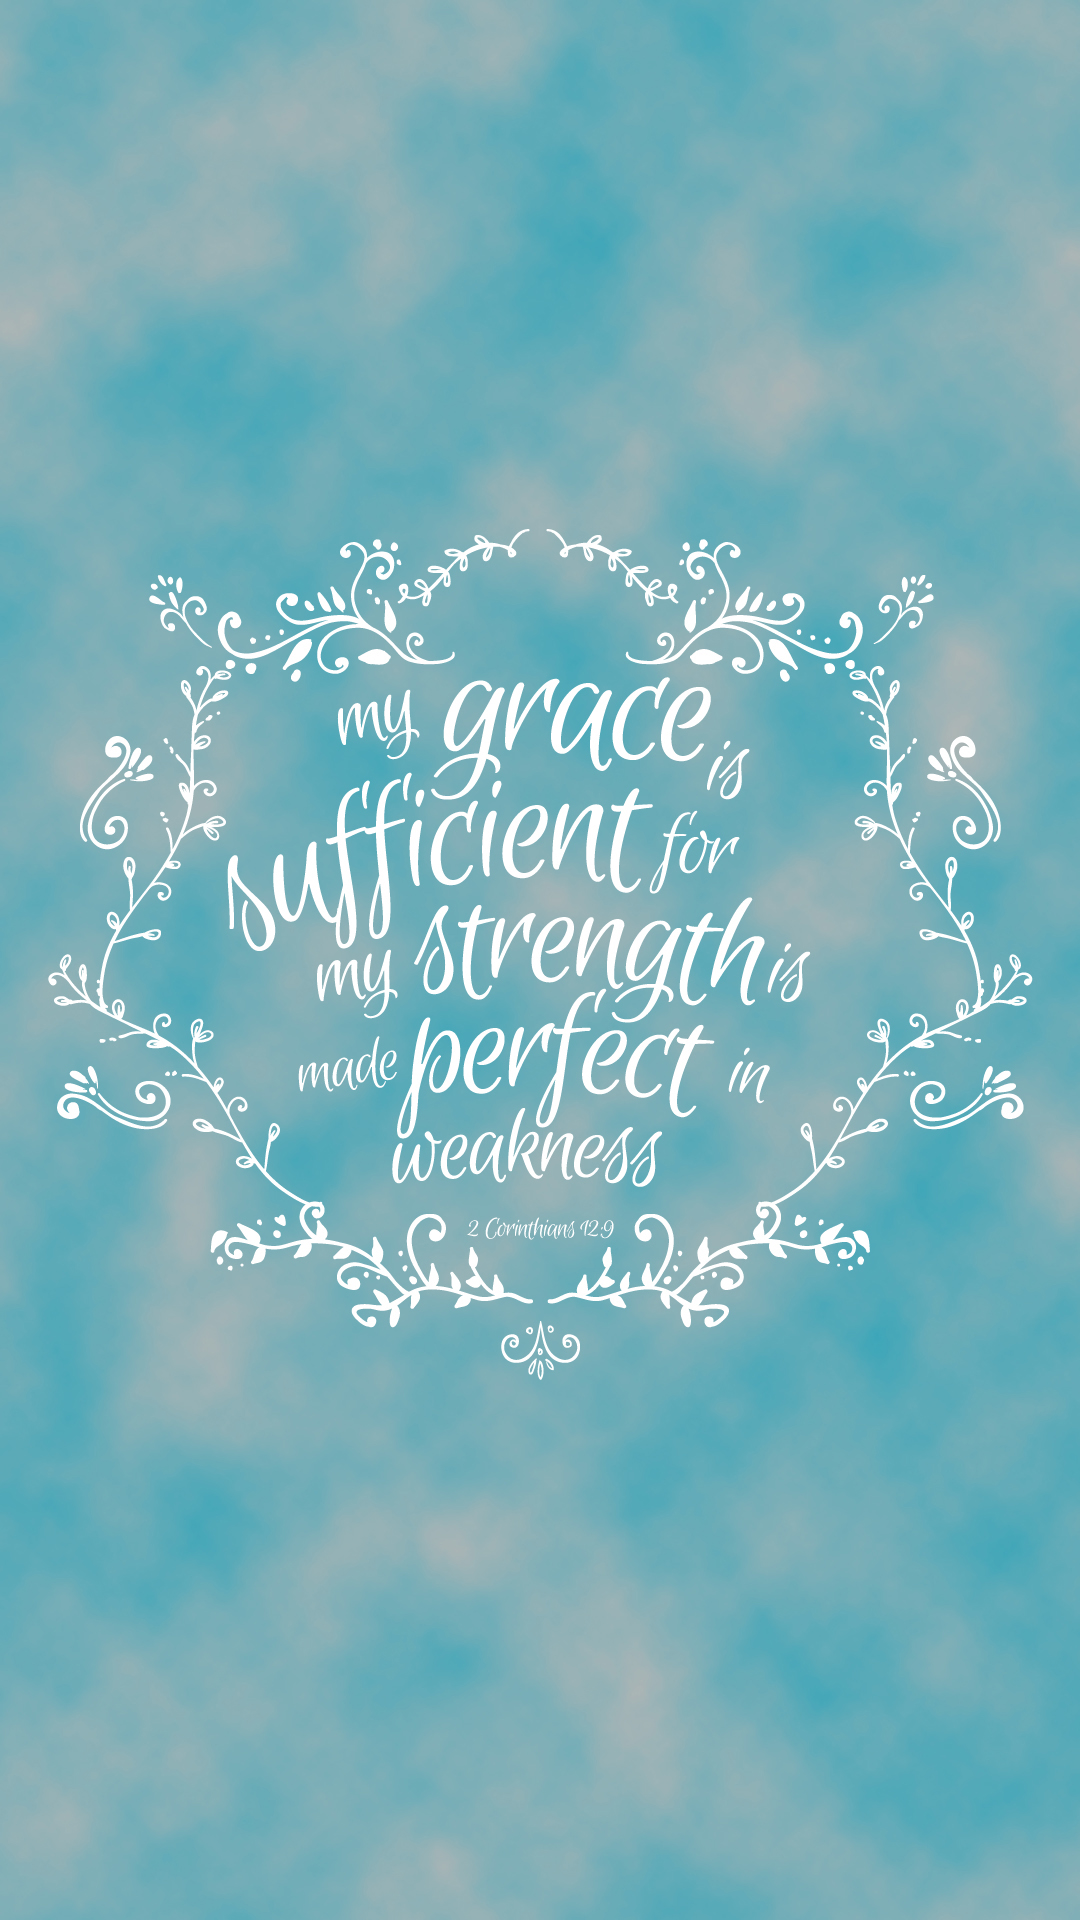 Grace Quote Wallpaper - Iphone 2 Corinthians 12 9 - HD Wallpaper 